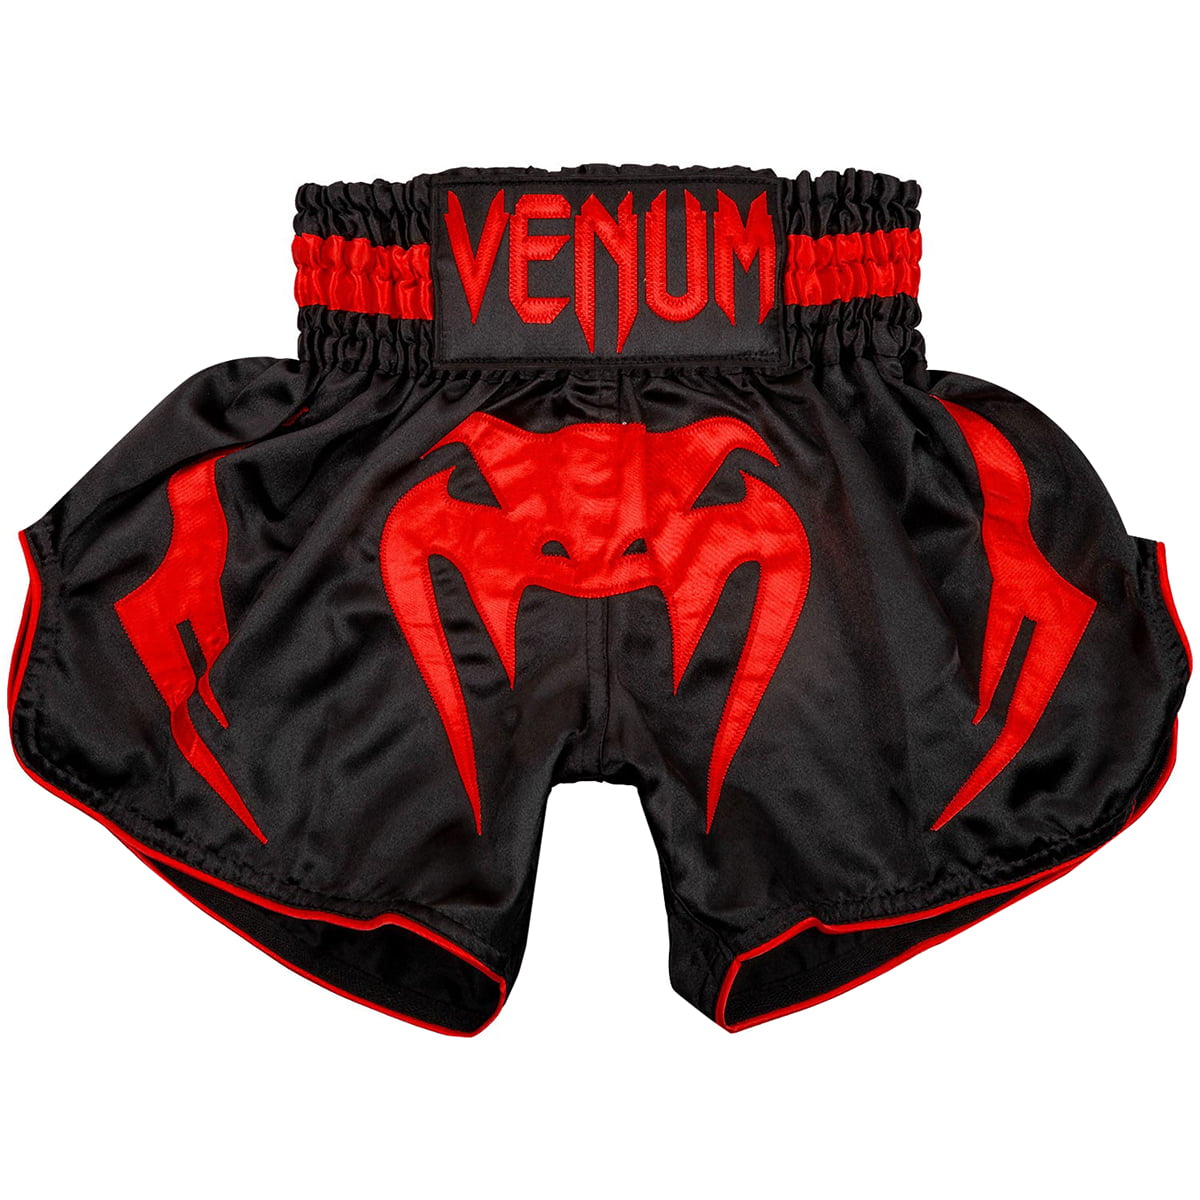 Black/Matte XS NEW Venum Bangkok Inferno Muay Thai Shorts 